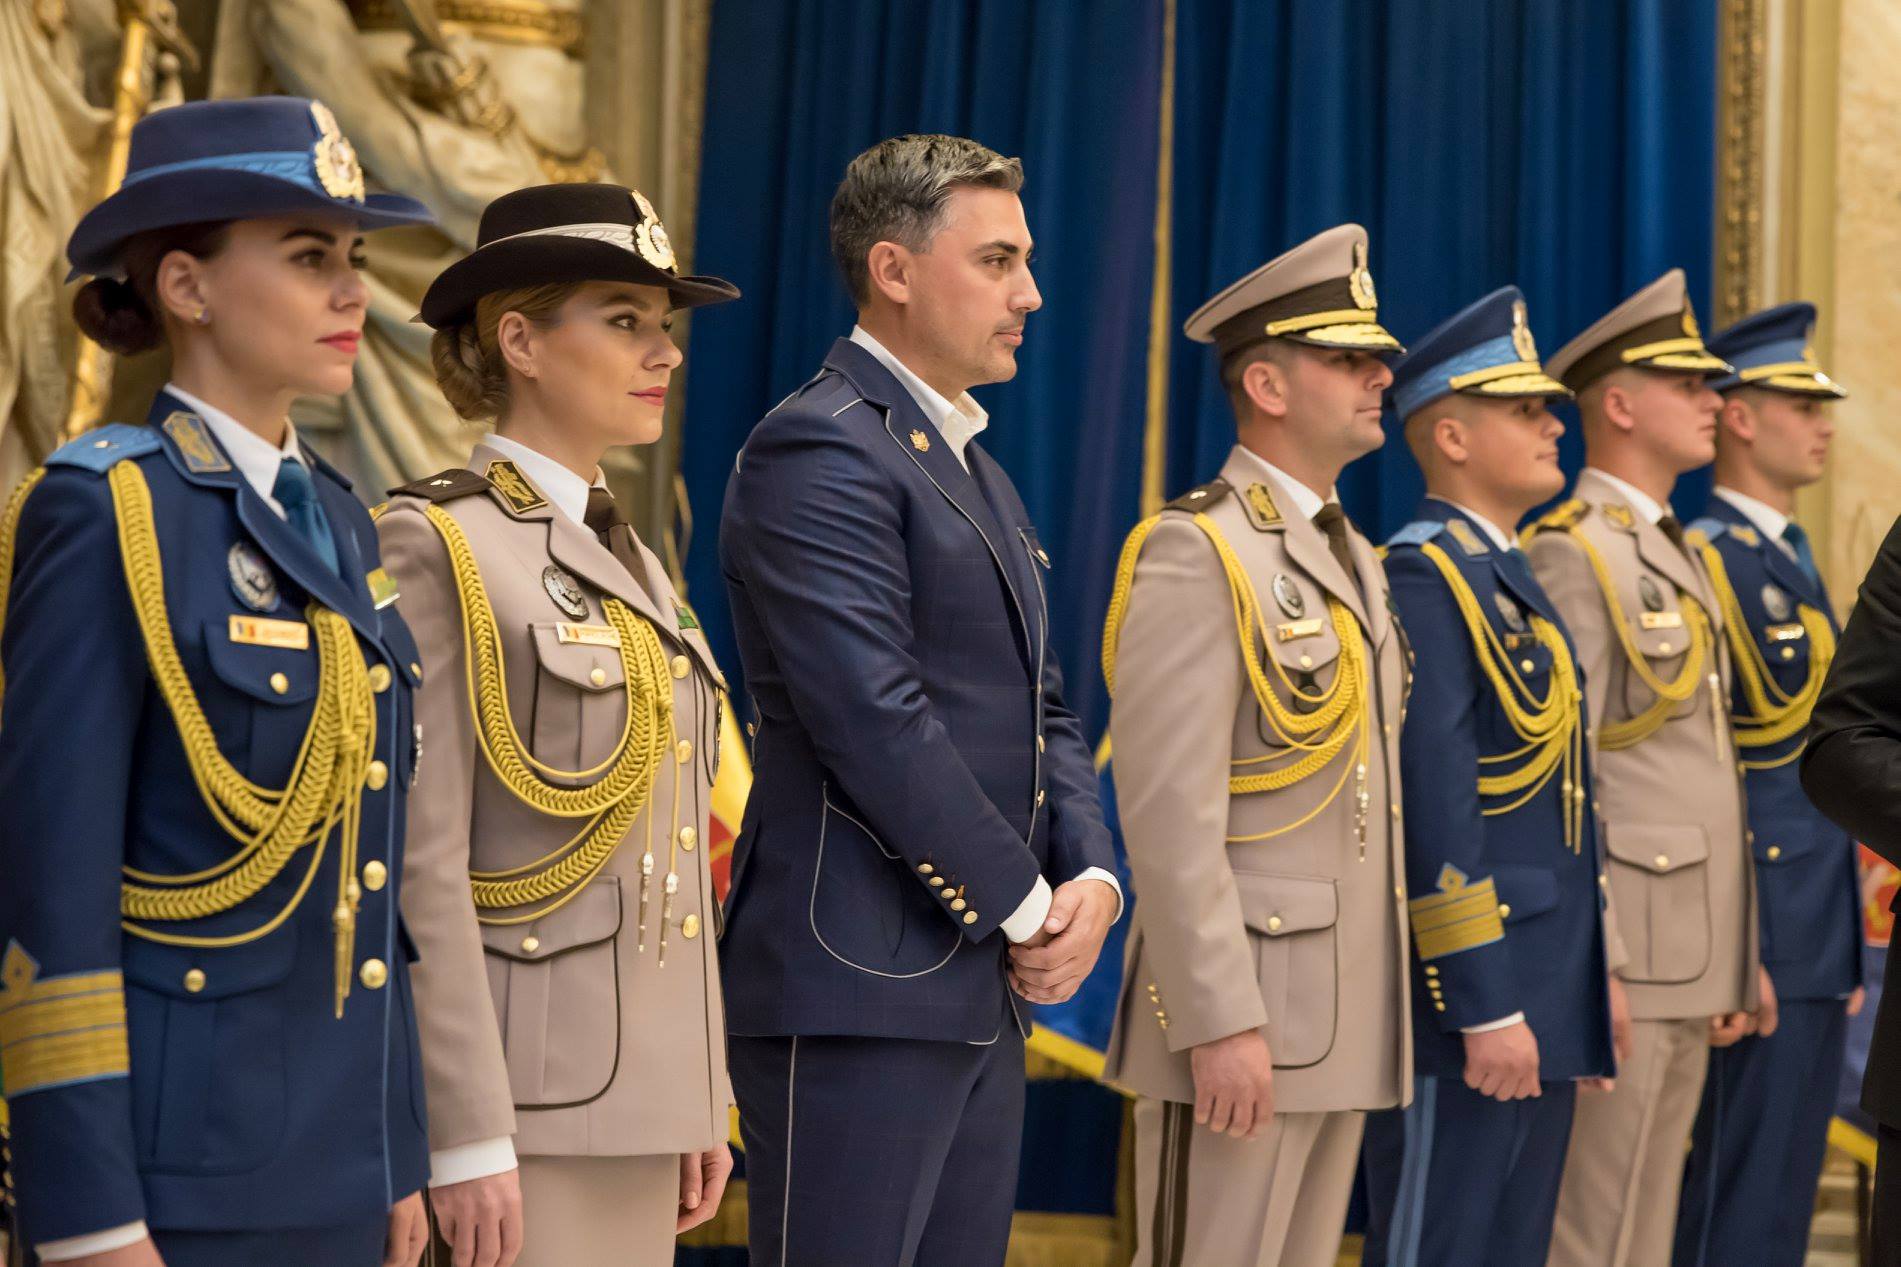 Alexandru Ciucu At Presentation Of New Army Uniforms Photo Mapn On FB Photo By Bogdan Pantilimon 